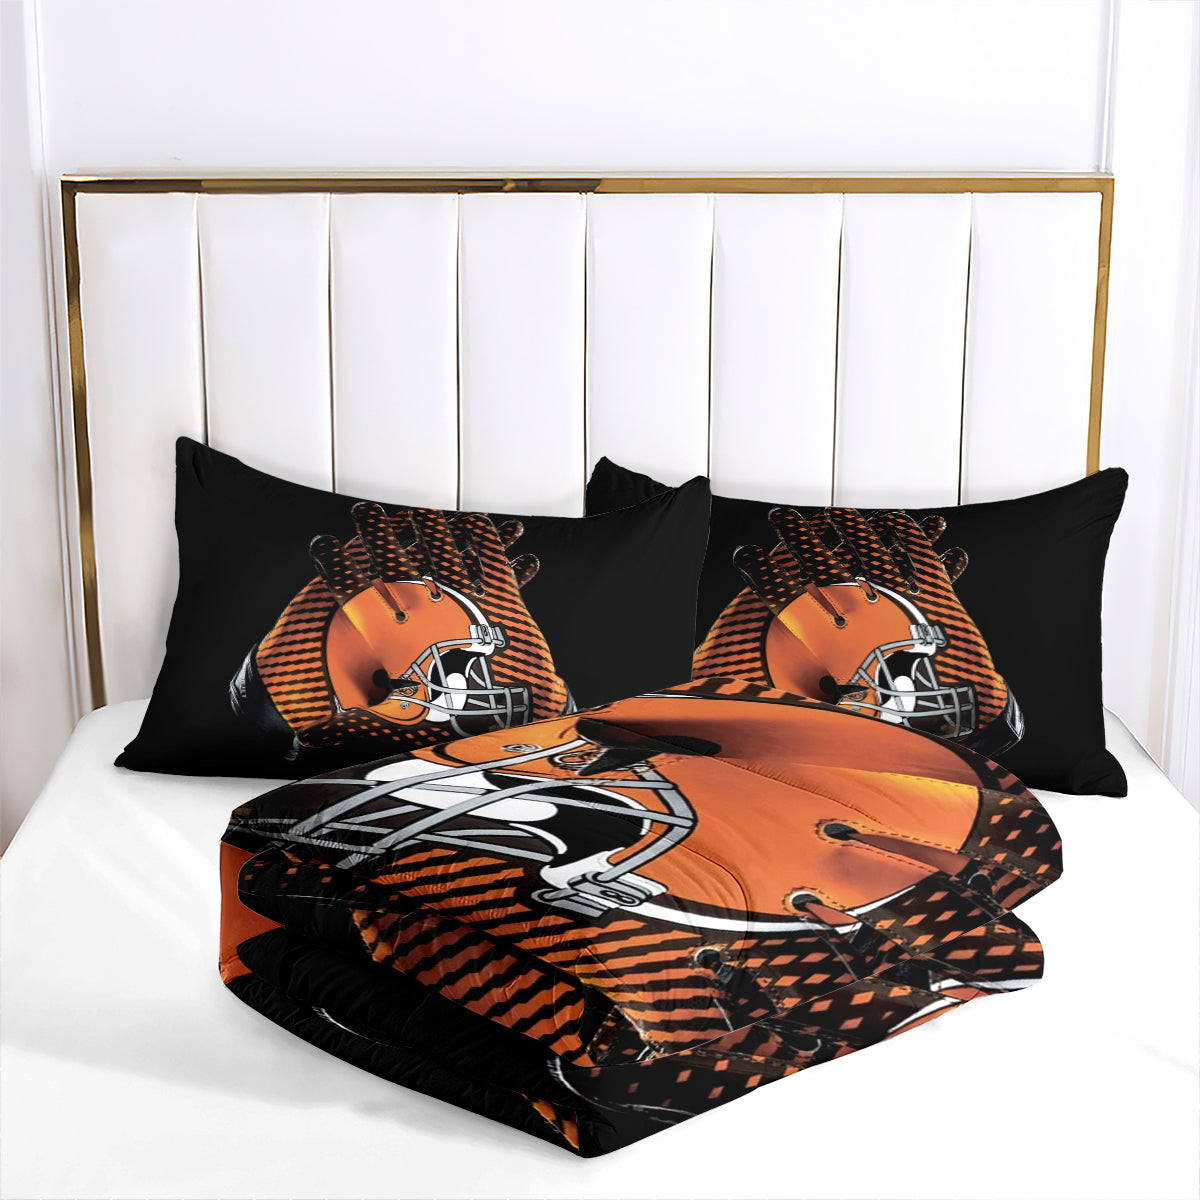 Cleveland Browns Football Team Comforter Pillowcase Sets Blanket All Season Reversible Quilted Duvet